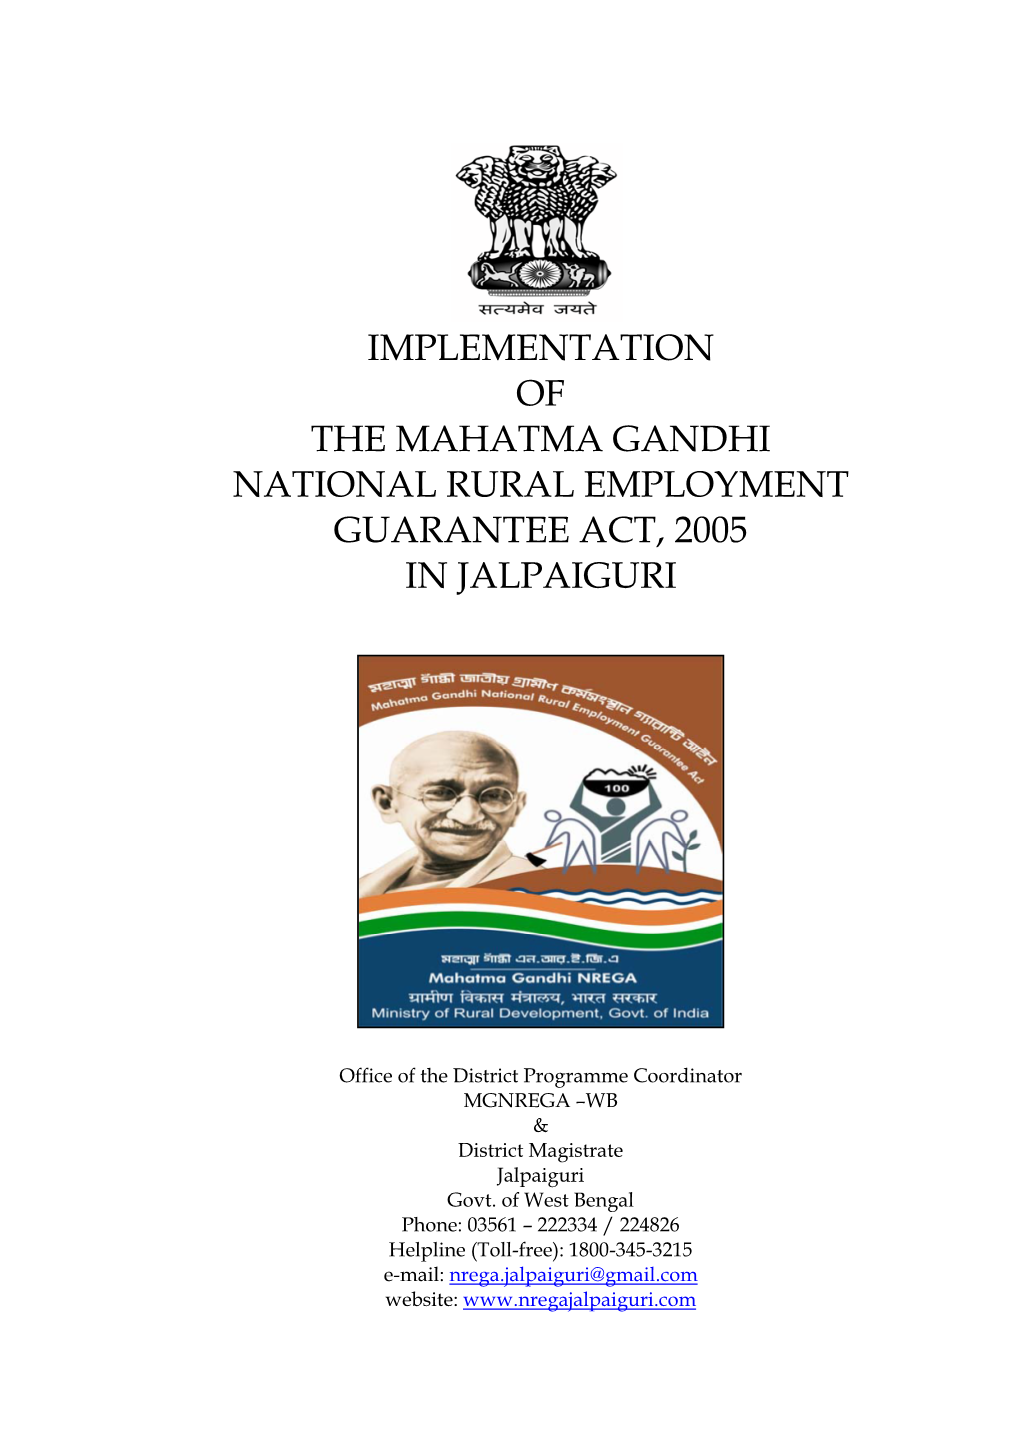 Implementation of the Mahatma Gandhi National Rural Employment Guarantee Act, 2005 in Jalpaiguri